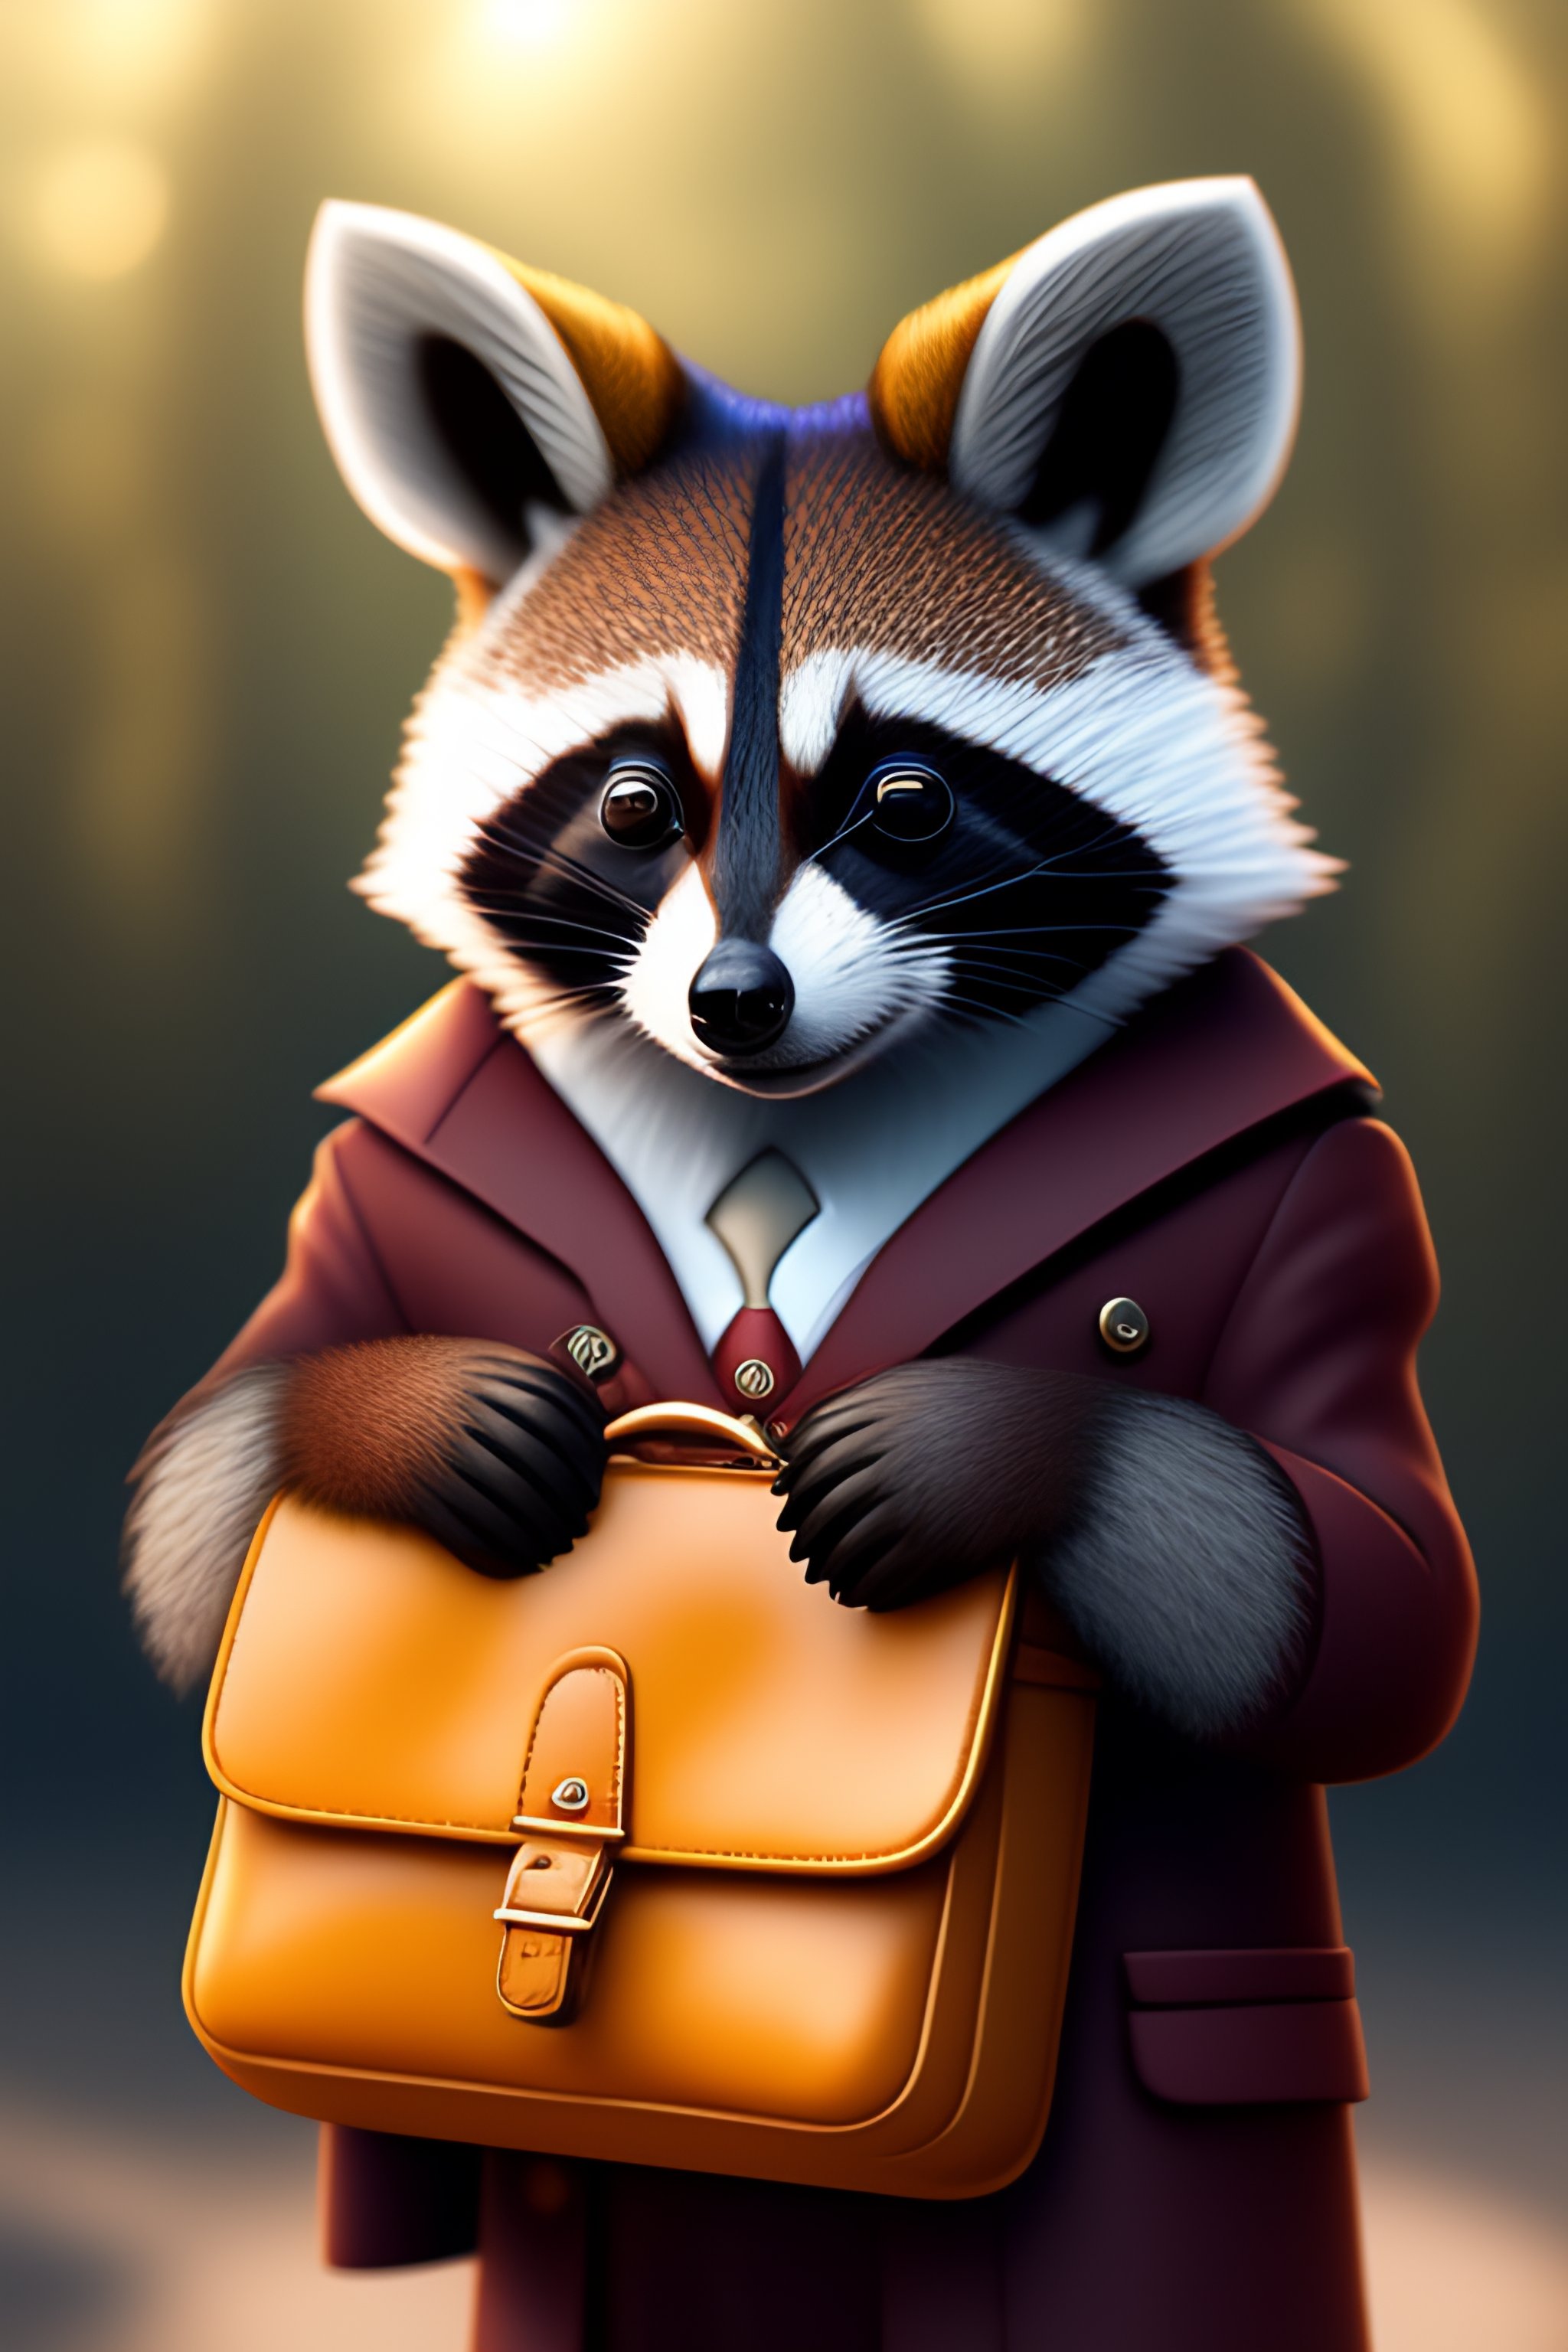 Lexica - Cute cartoonish Ukrainian racoon doctor with a briefcase